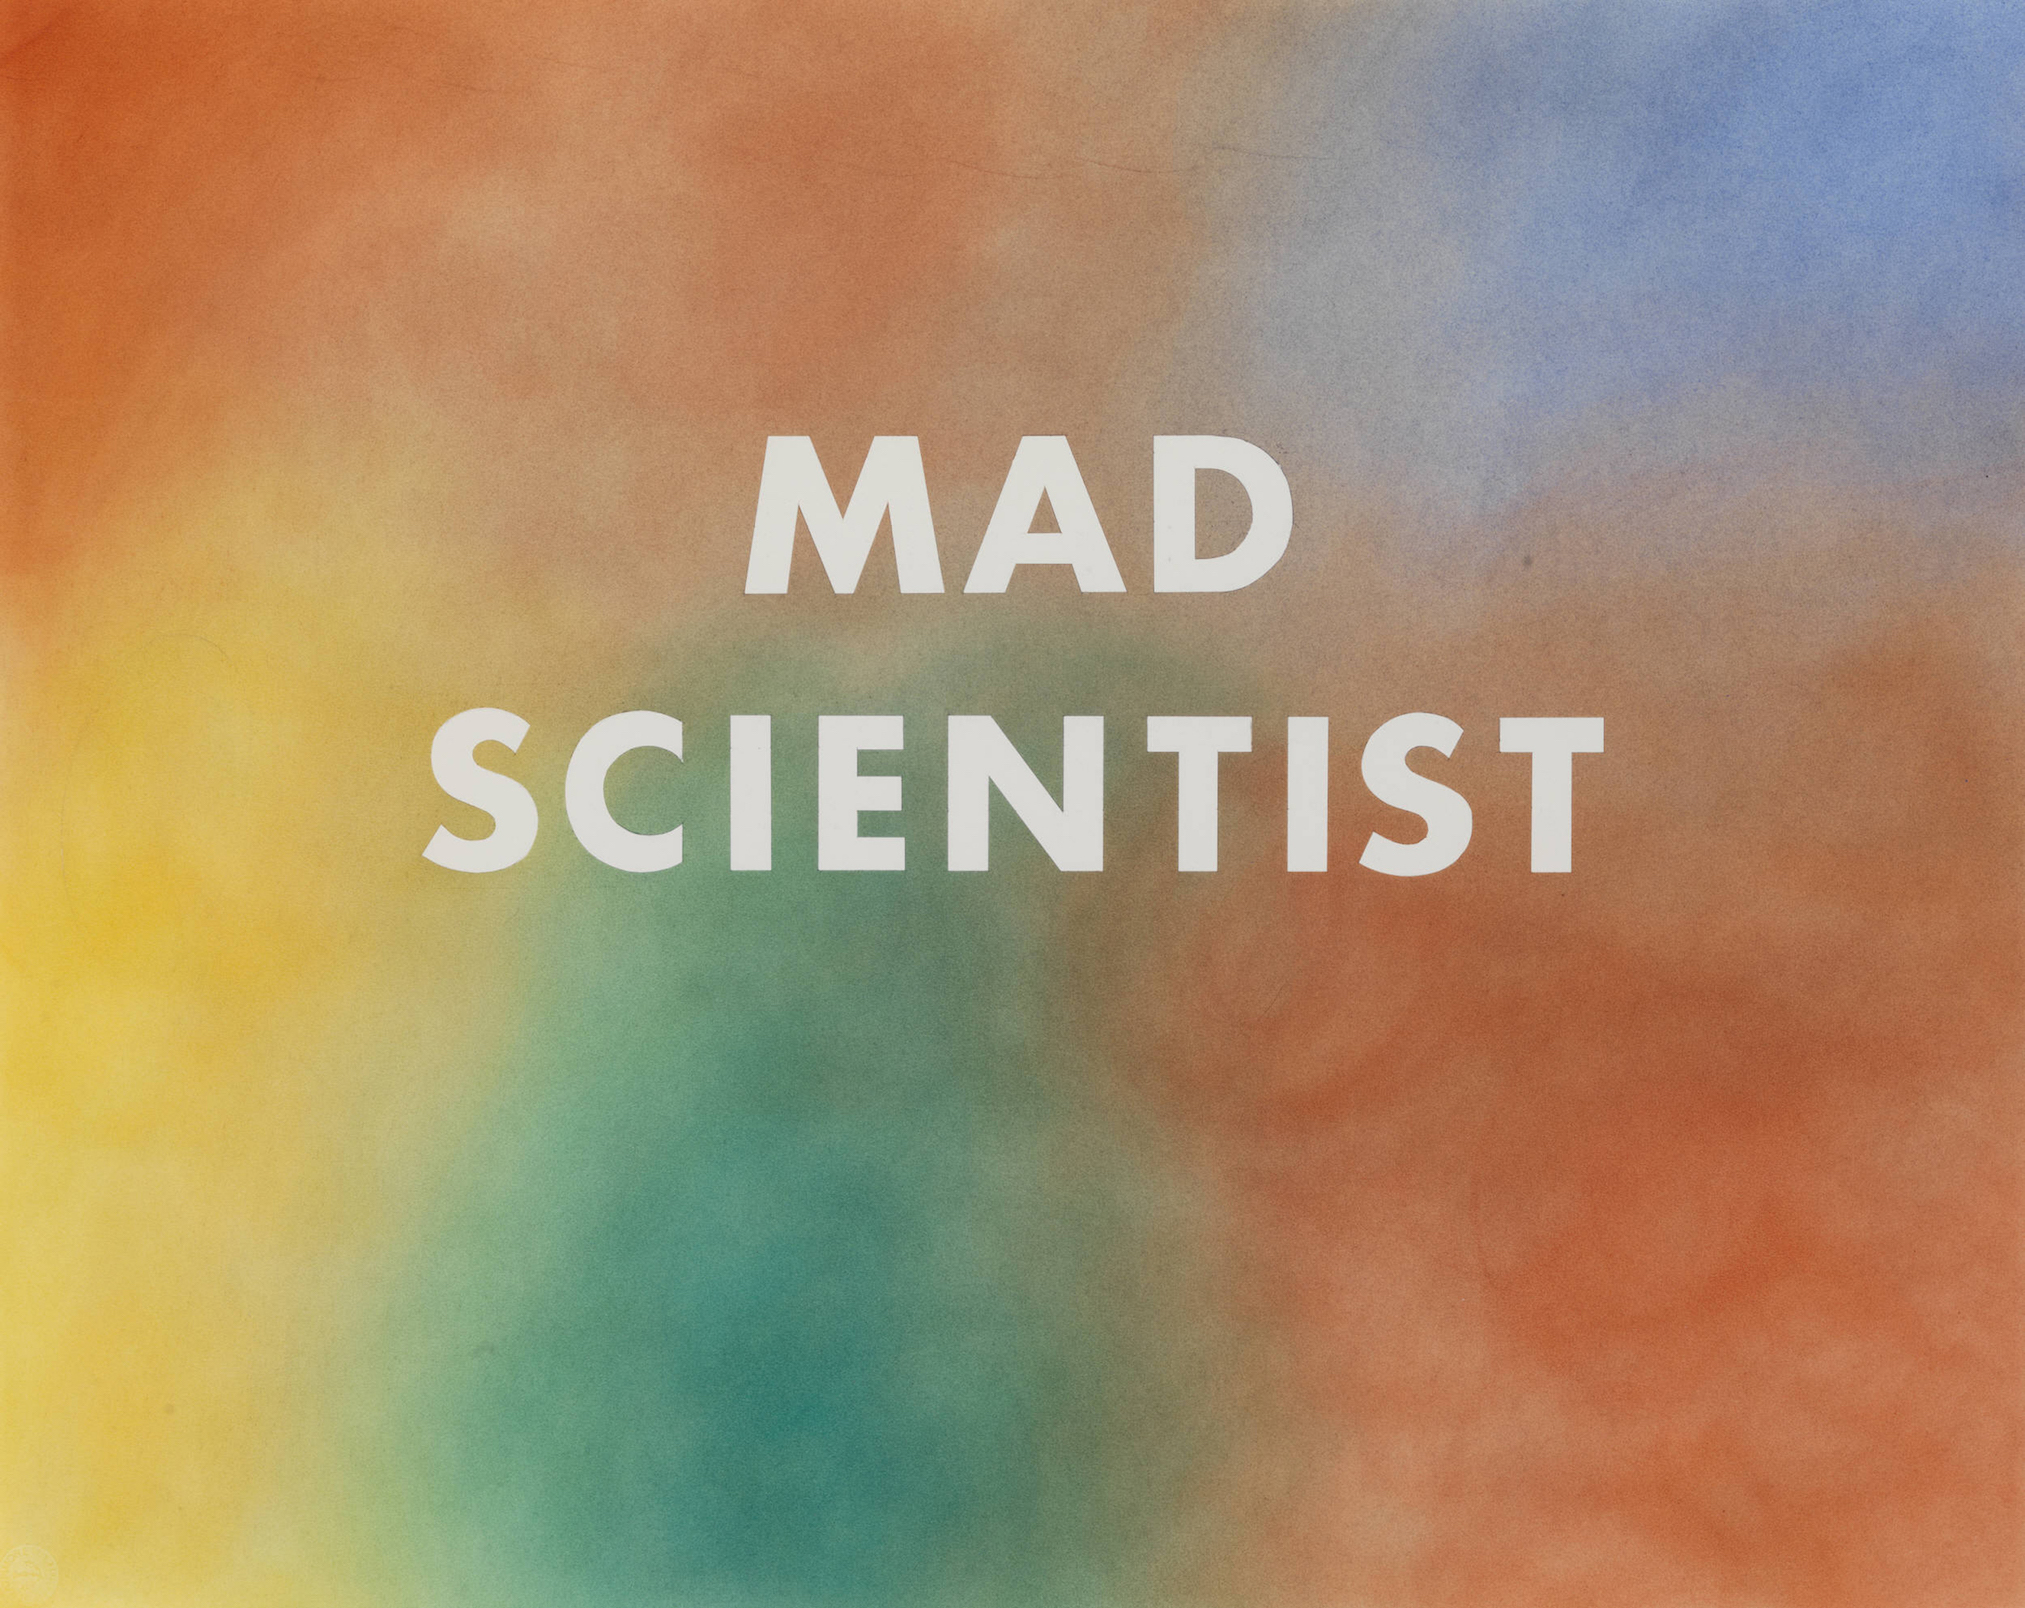 Mad Scientist, Ed Ruscha, 1975